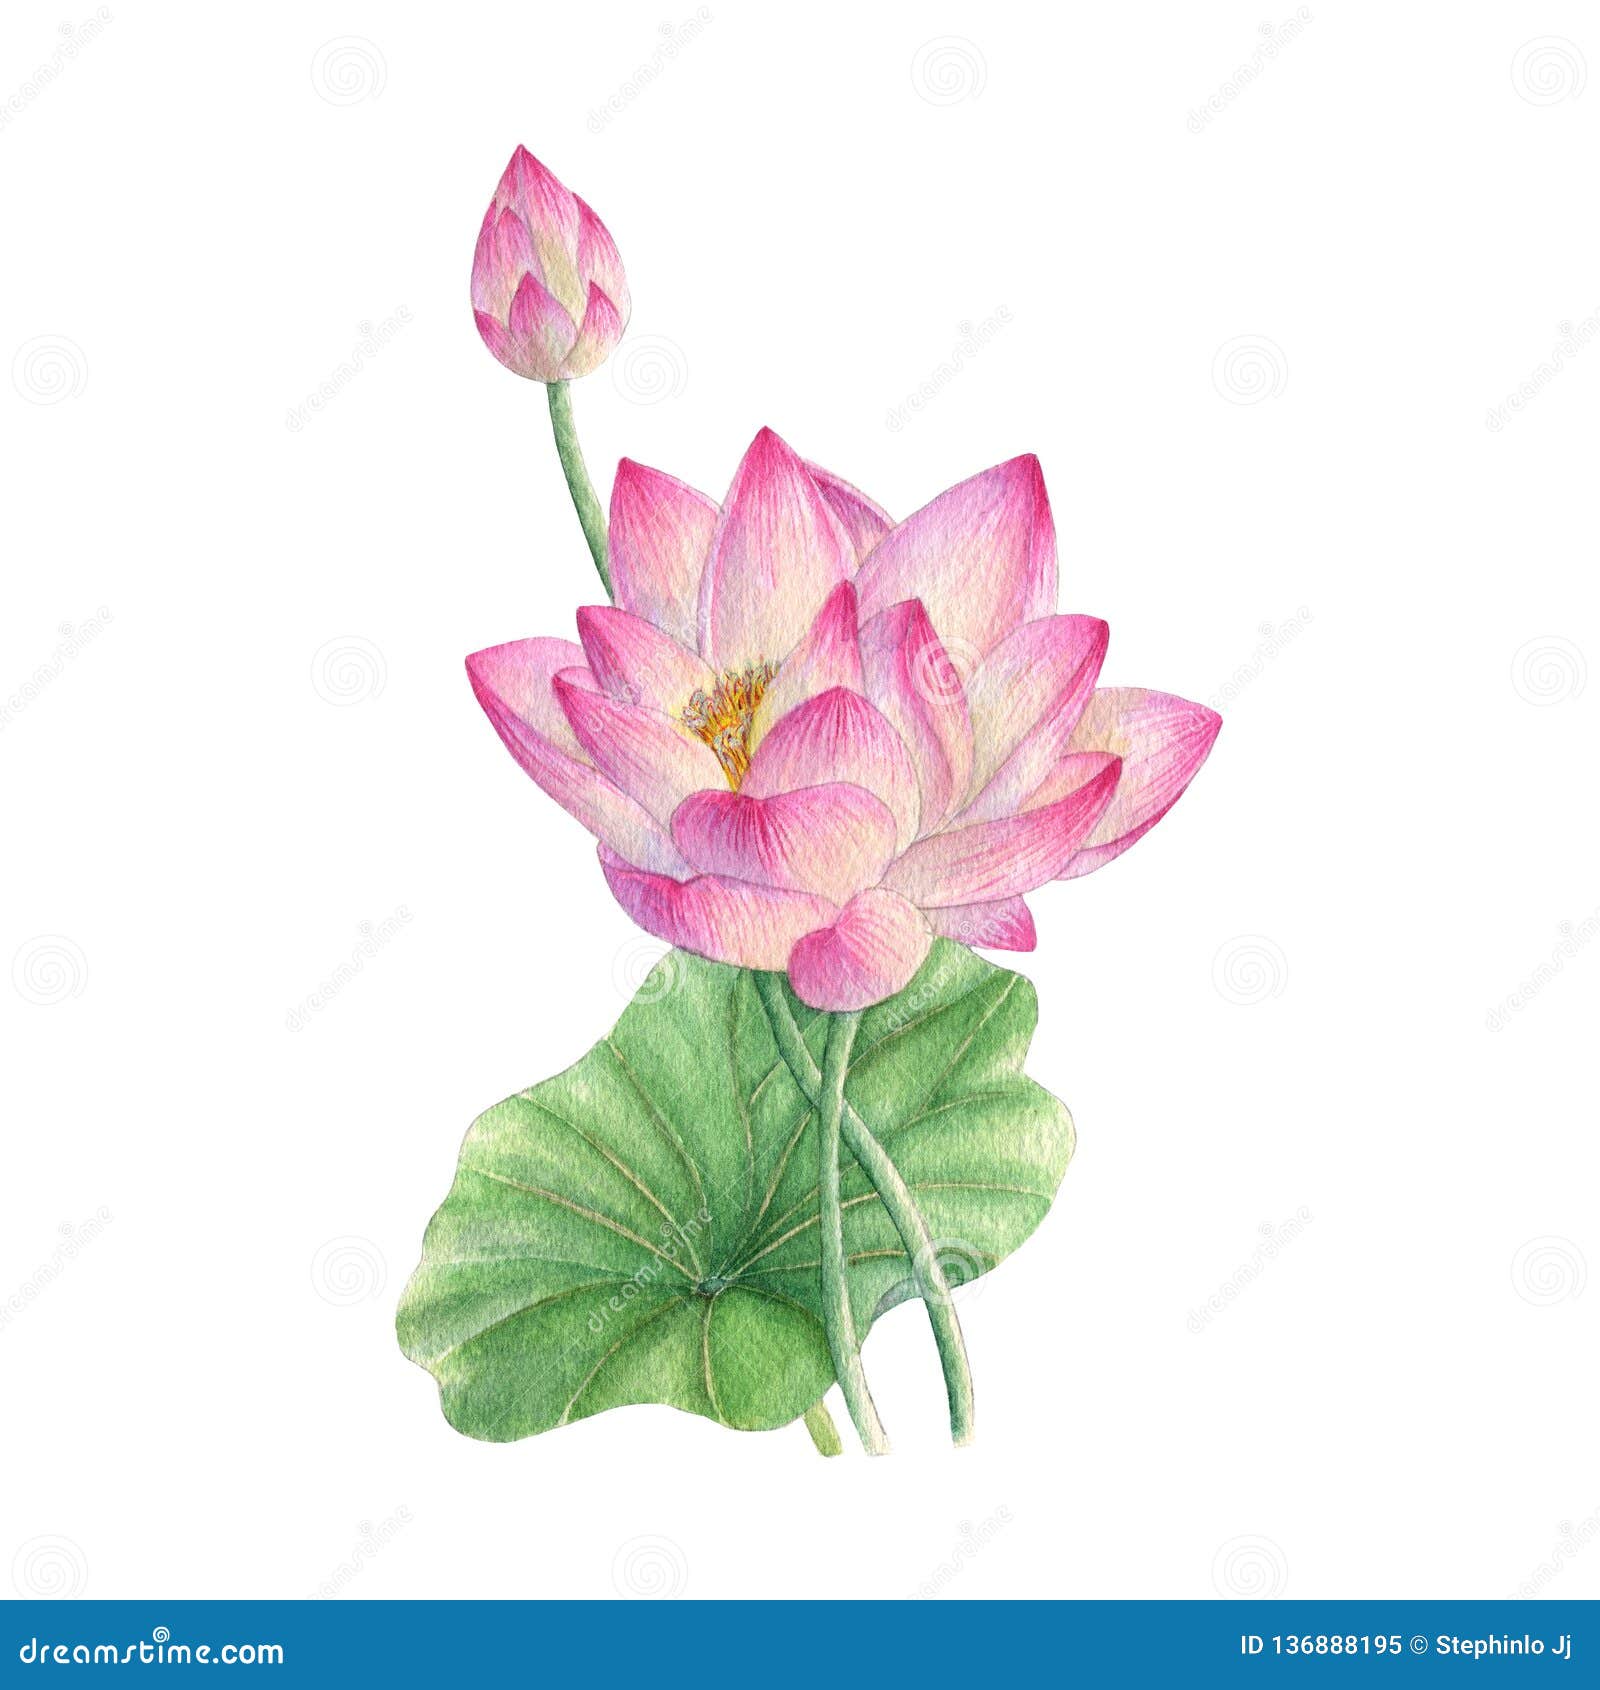 Lotus Flower Illustration Watercolor Painting.Watercolor Hand  Painted.illustration of a Lotus Flower Isolated. Stock Illustration -  Illustration of graphic, botanical: 136888195